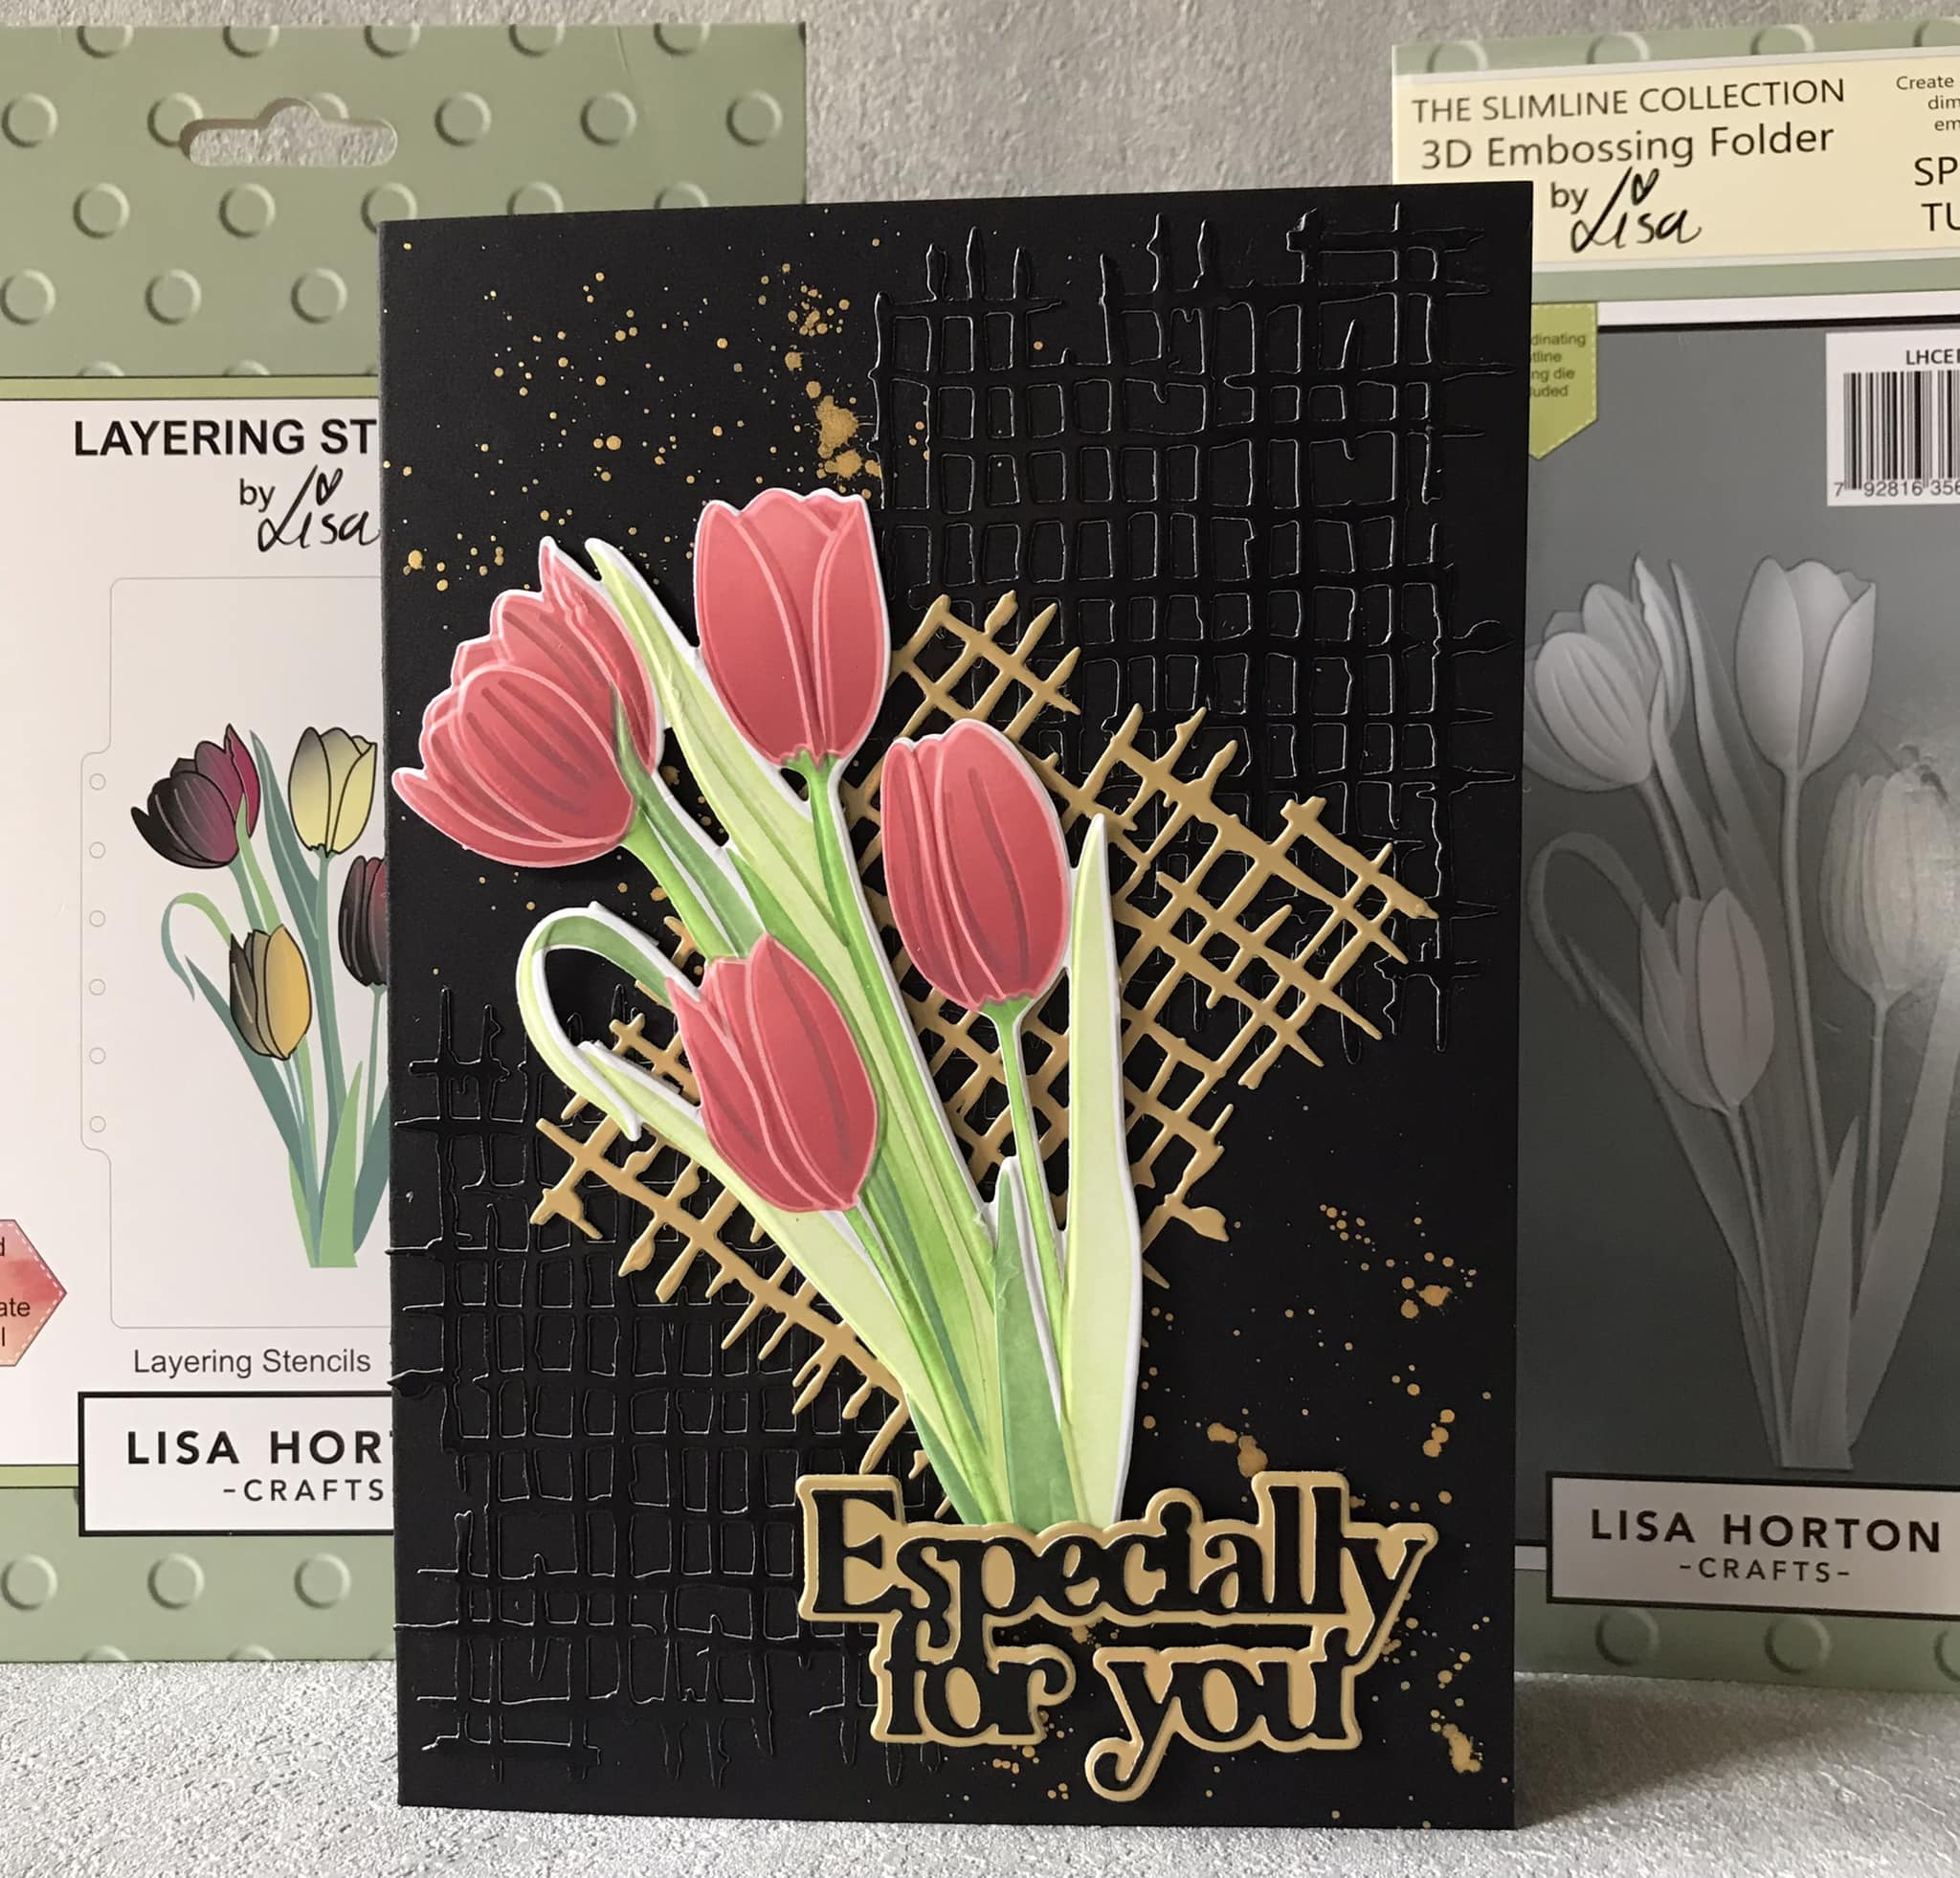 Lisa Horton Crafts Tulips Slimline Layering Stencils